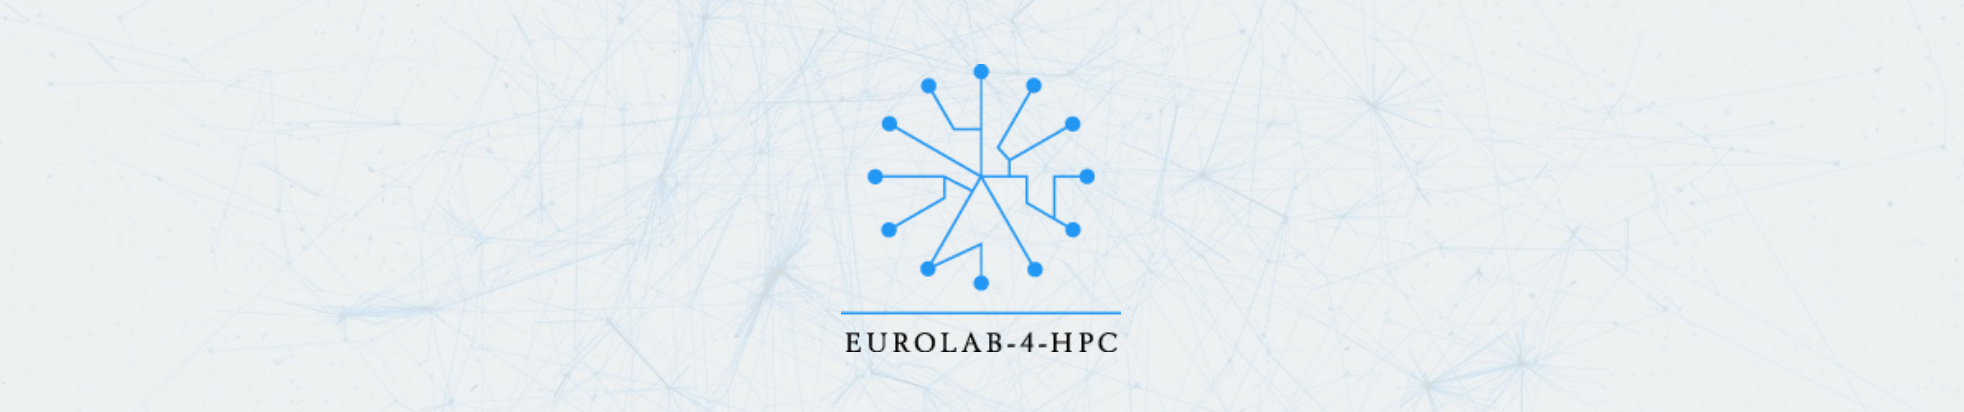 EuroLab-4-HPC Logo